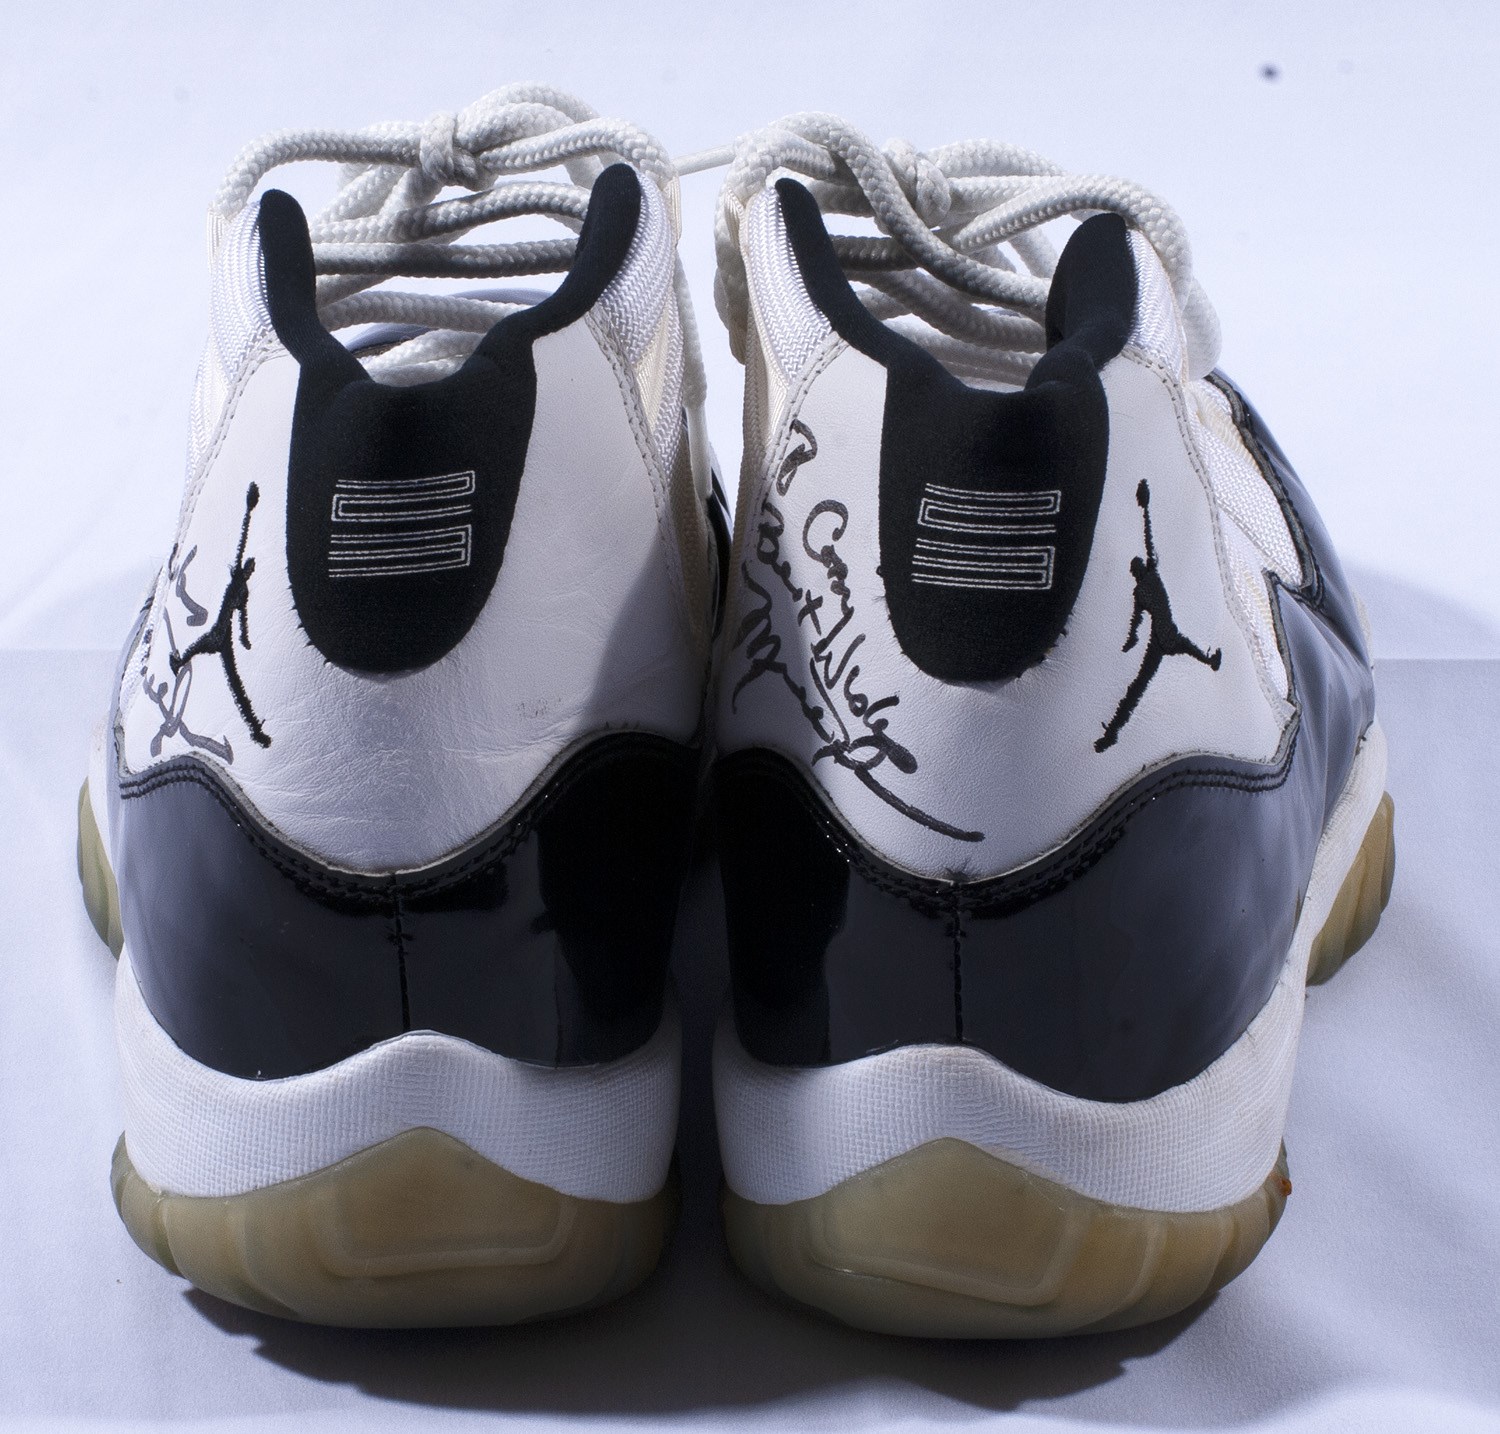 1/15/1996 Michael Jordan Dual-Signed Pair of Game Worn Air Jordan XI Shoes  - SCORED 46 PTS. IN BULLS WIN AT WASHINGTON (BULLETS BALL BOY & EX-NBA  PLAYER LOA) - PRICE REALIZED: $50,137 - SCP AUCTIONS